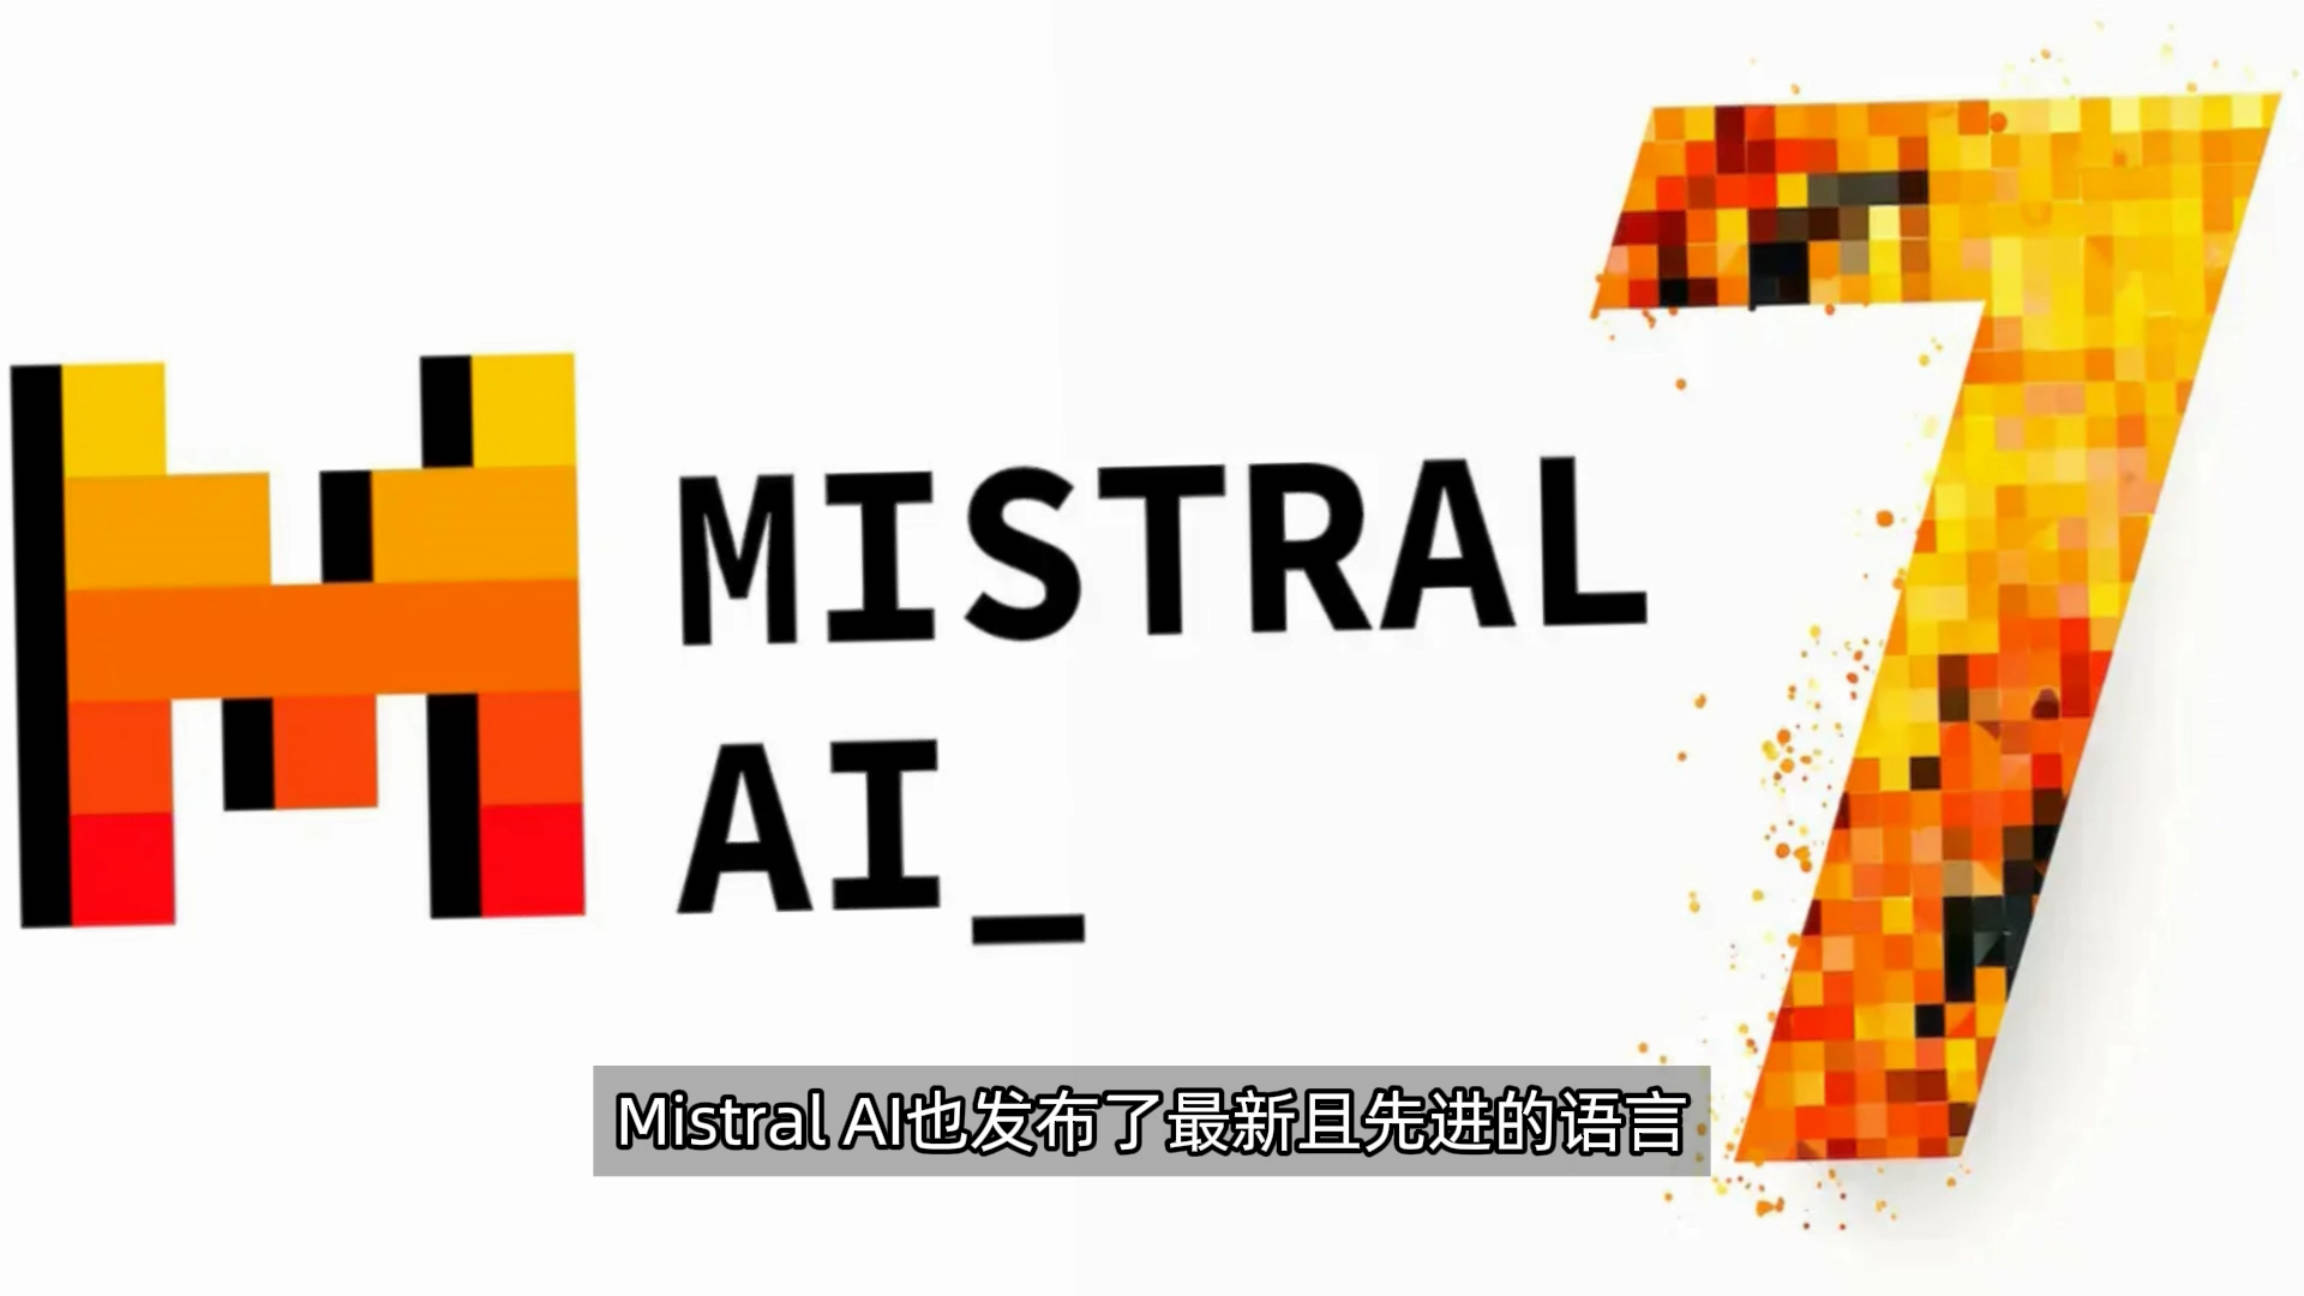 Mistral Large AI大语言模型发布，国内用户无需魔法可通过亚马逊Bedrock 直接使用